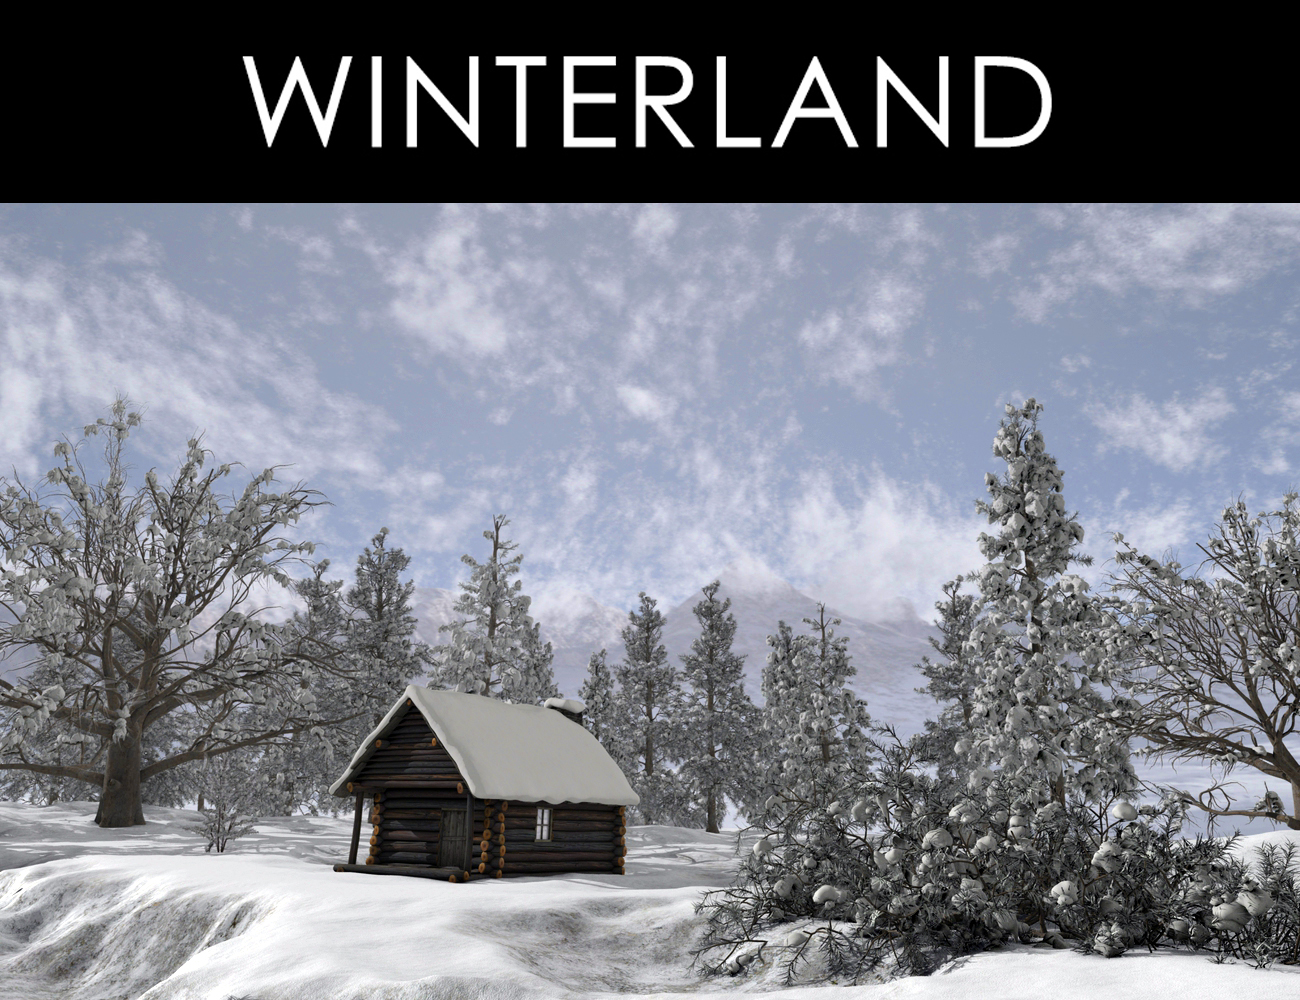 Winterland pics